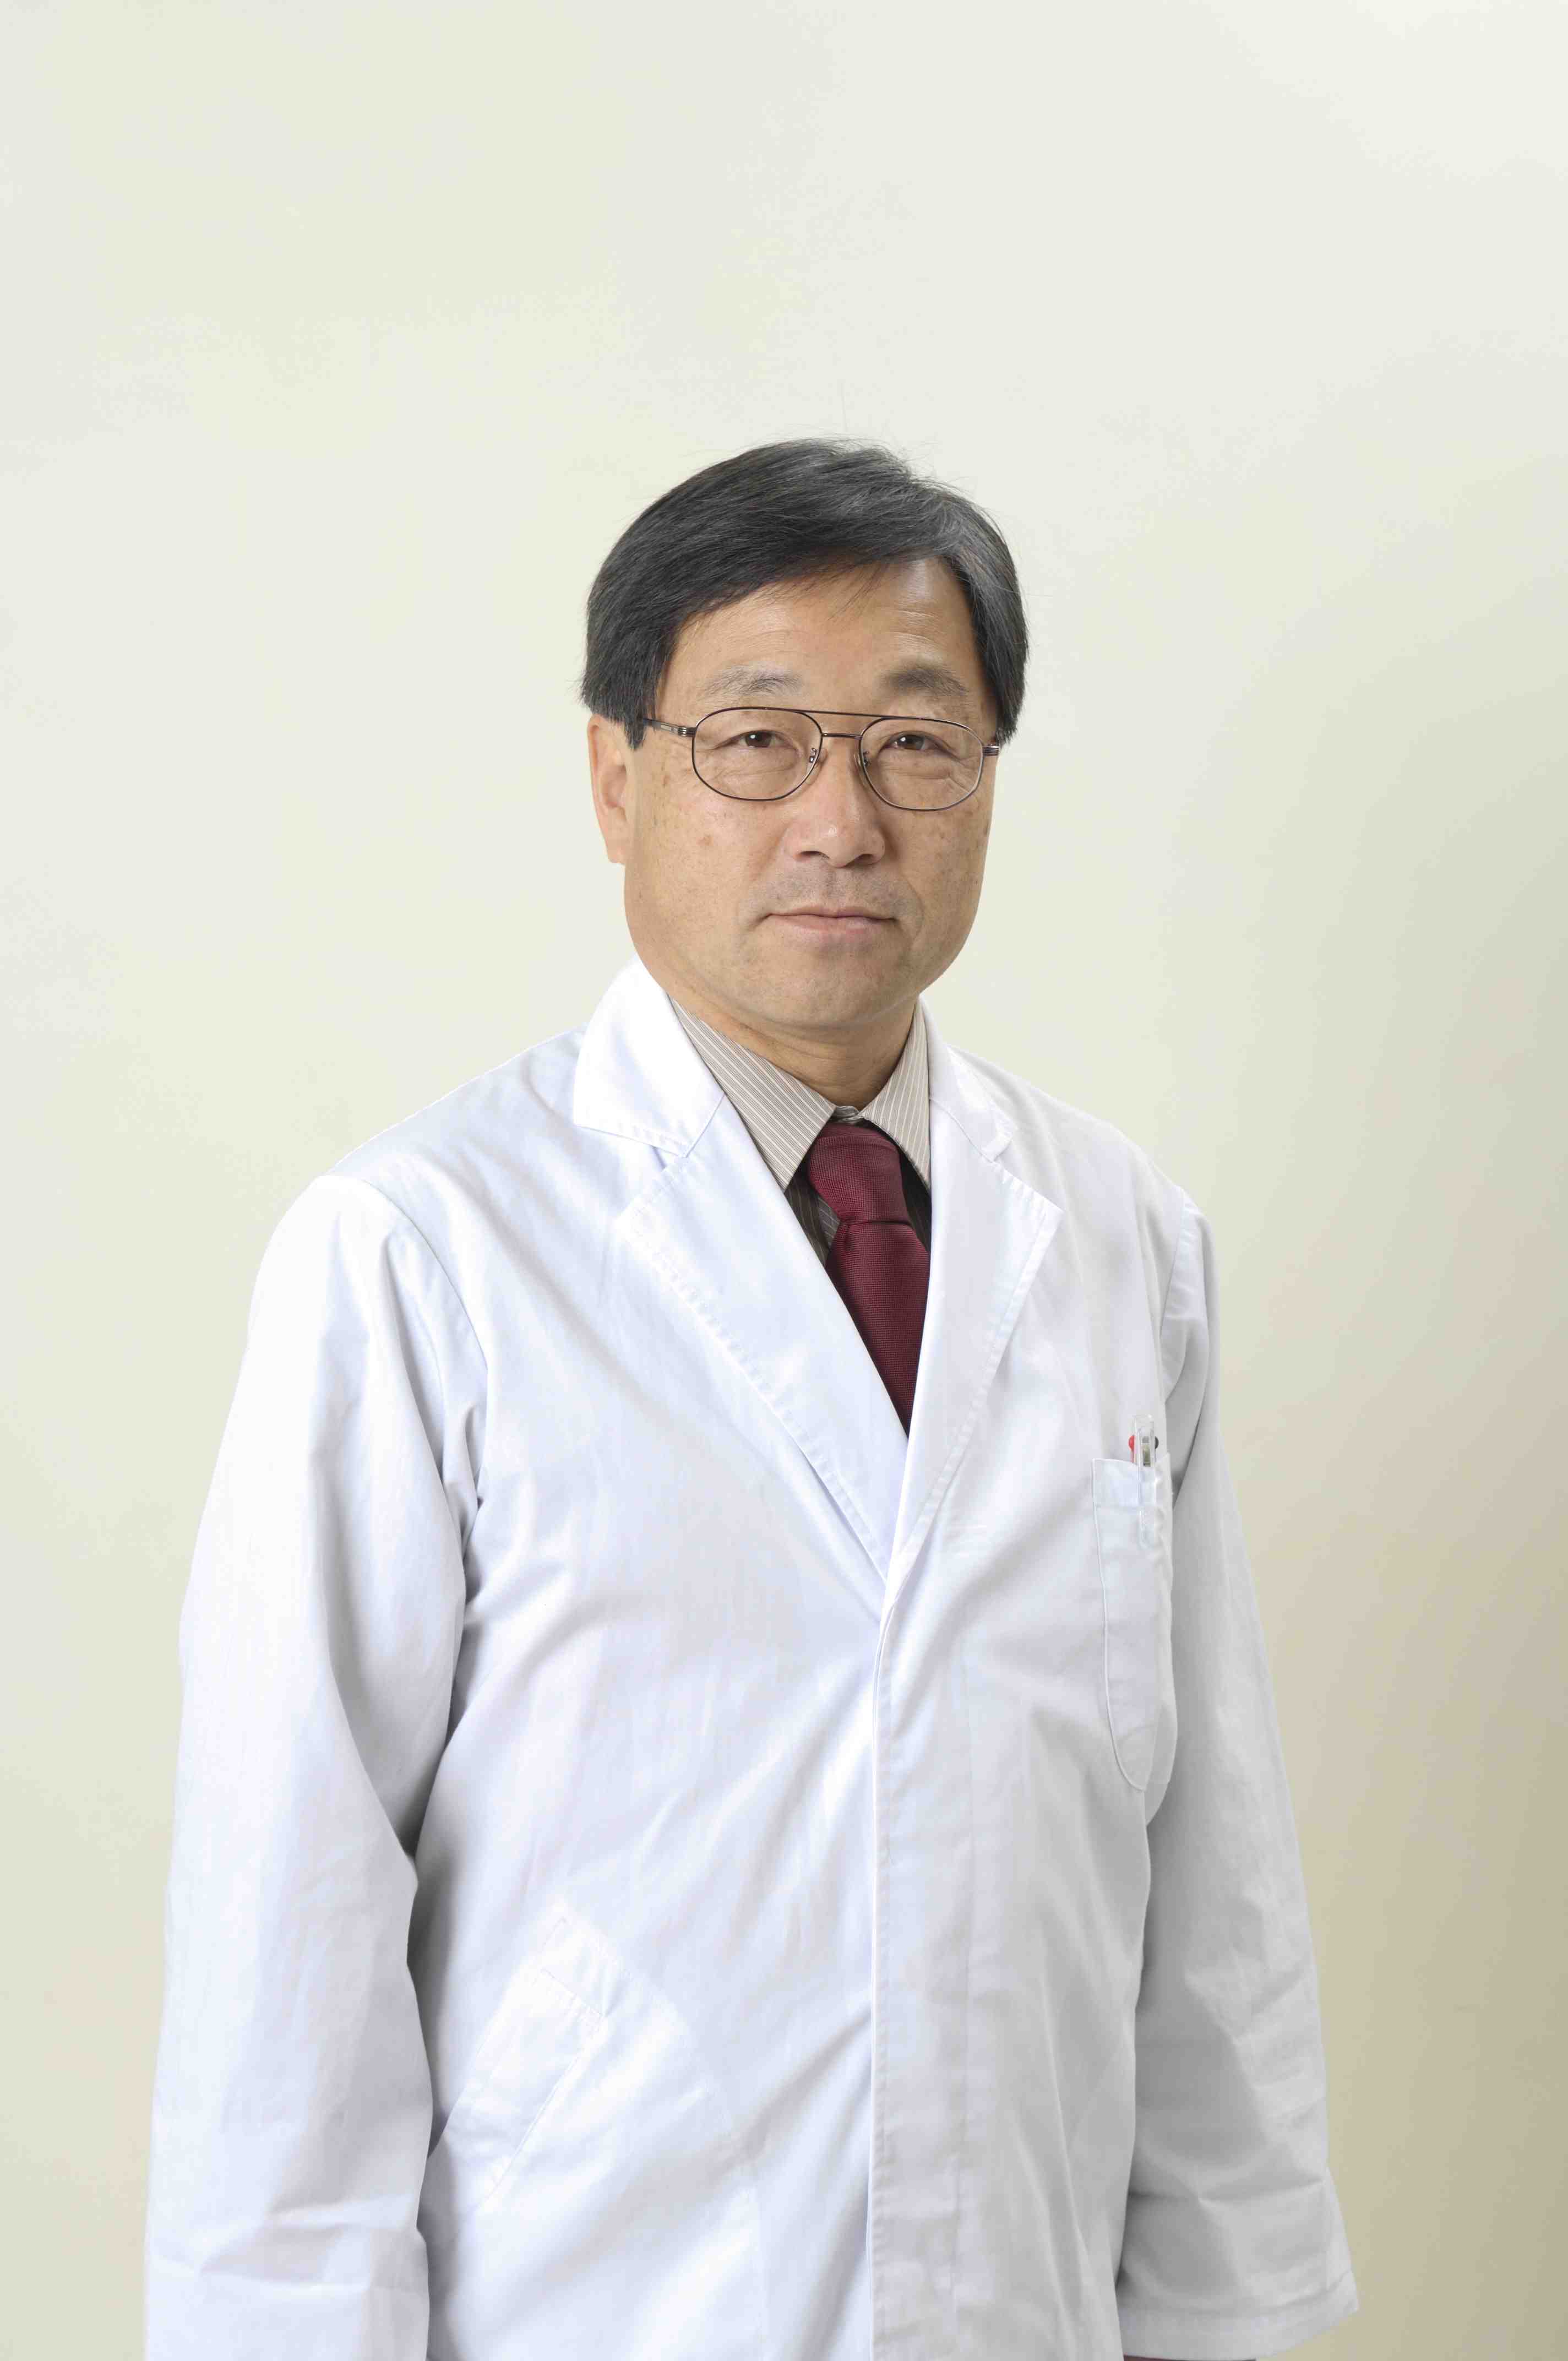 Yoh-ichi Koyama, Ph.D.